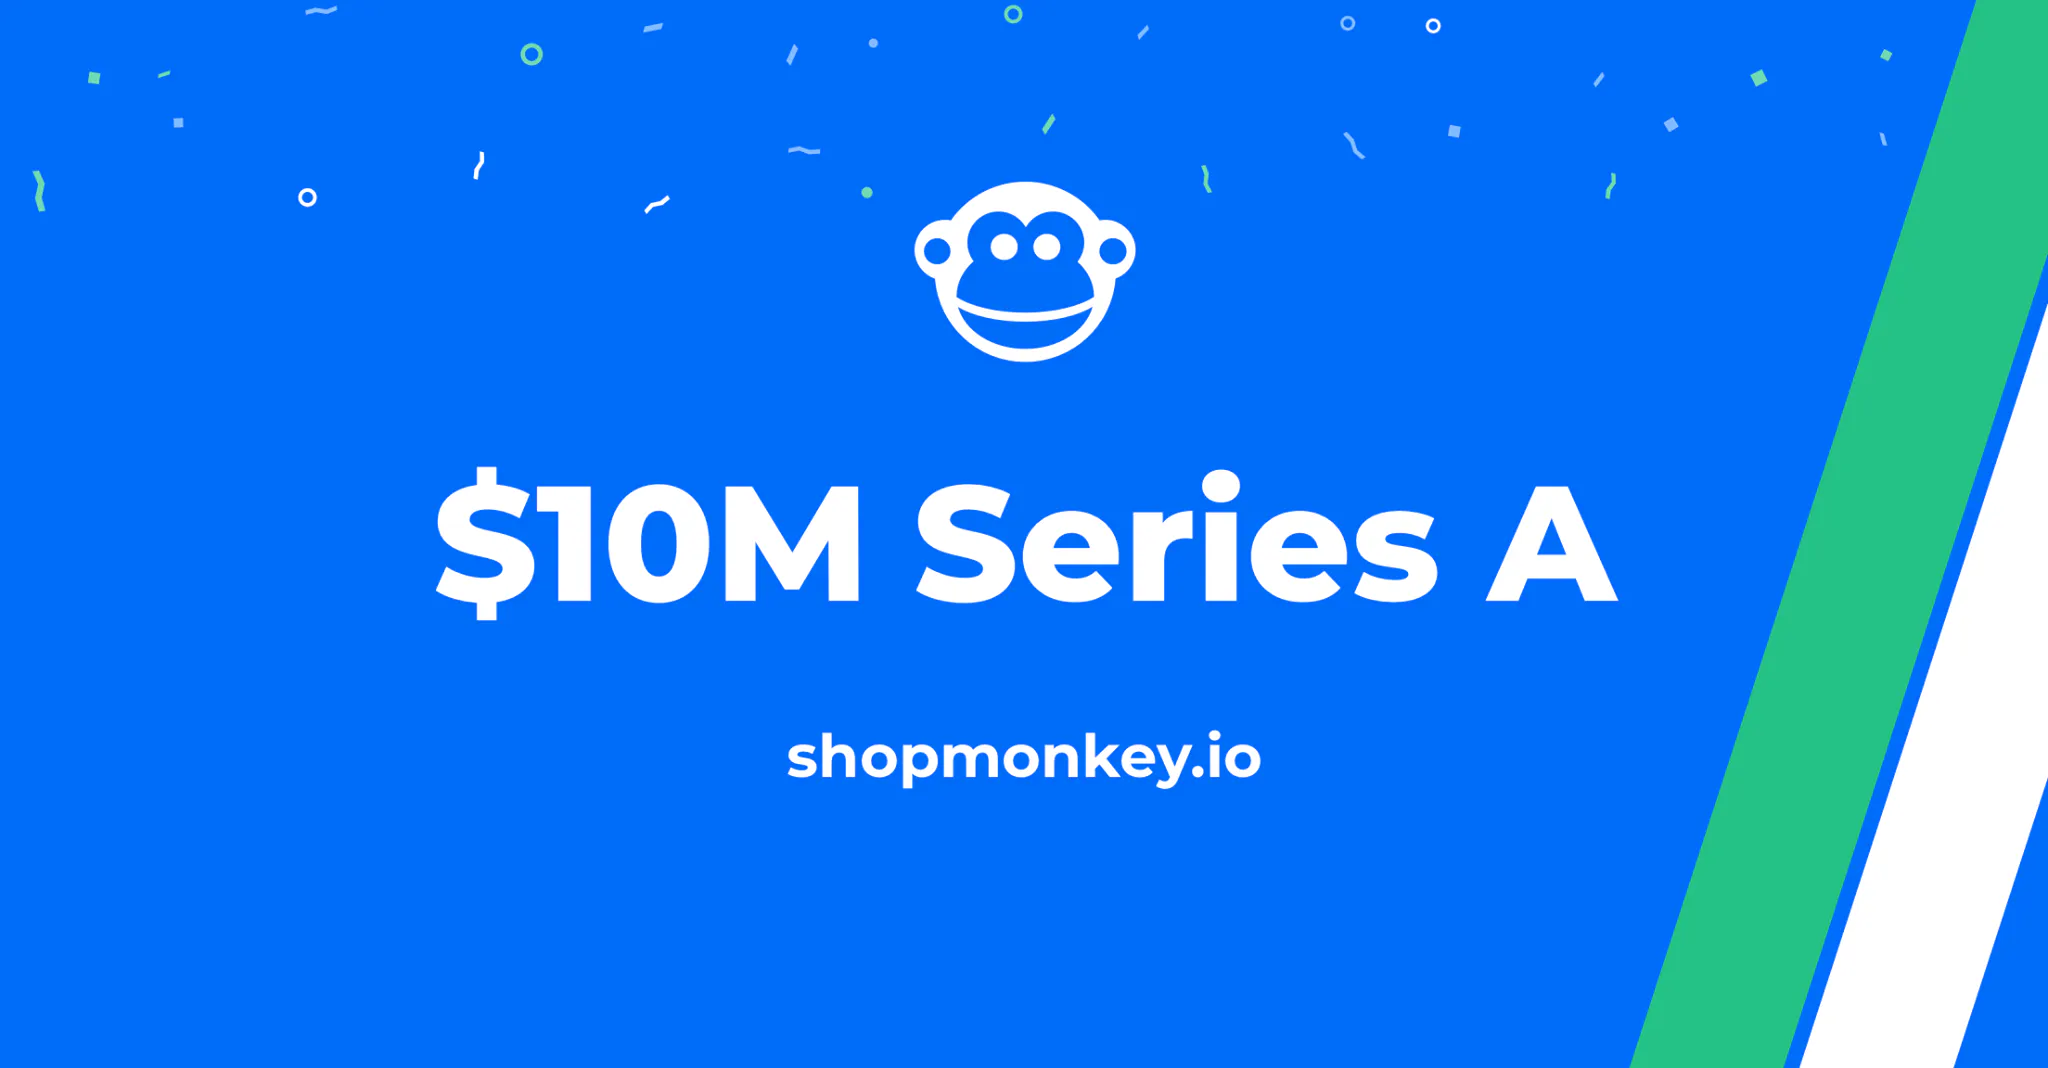 Shopmonkey announces Series A funding